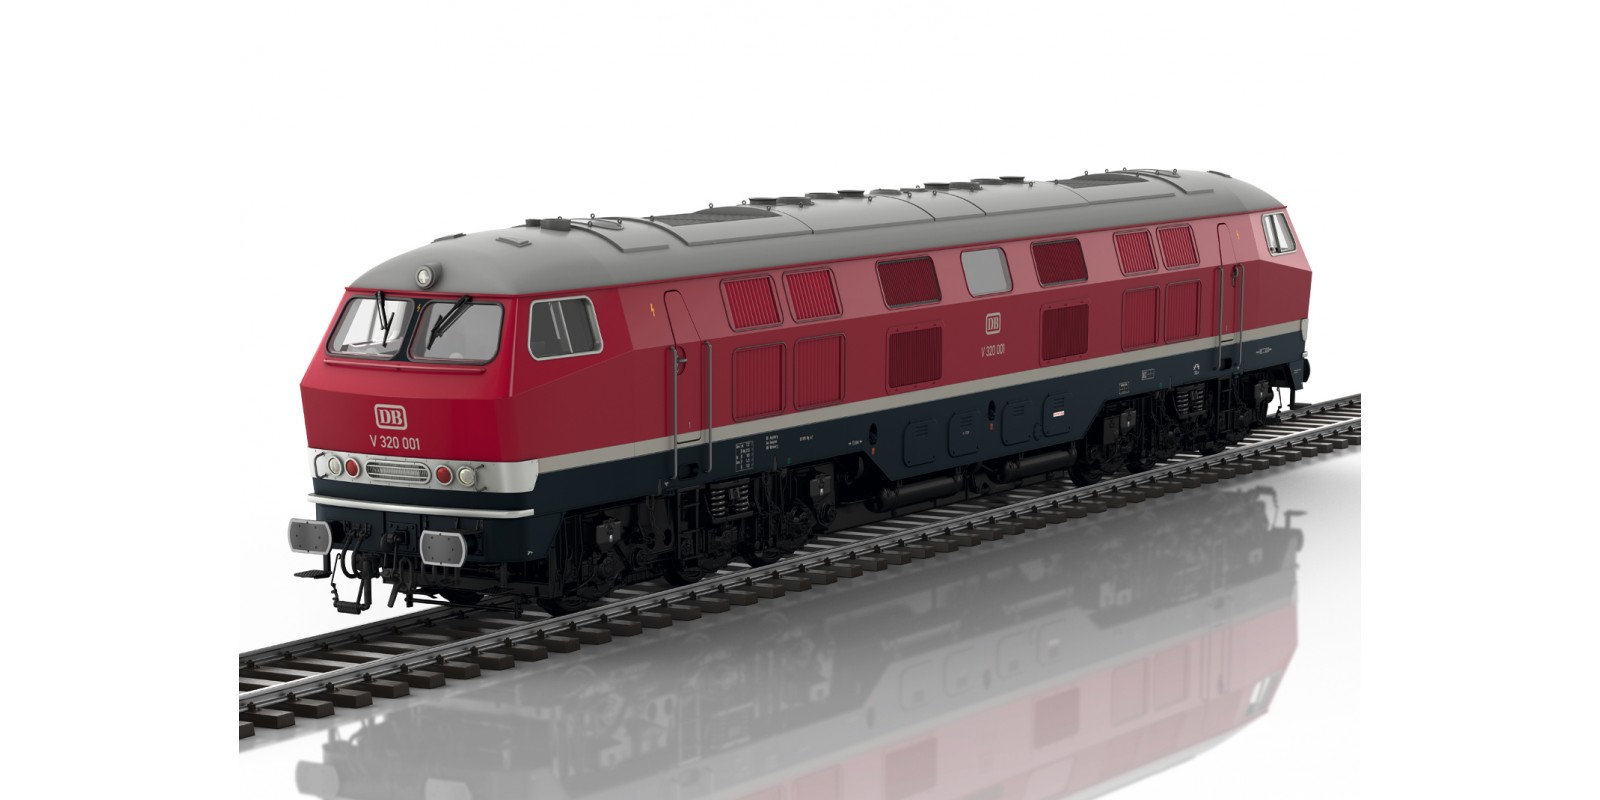 55320 Class V 320 Diesel Locomotive